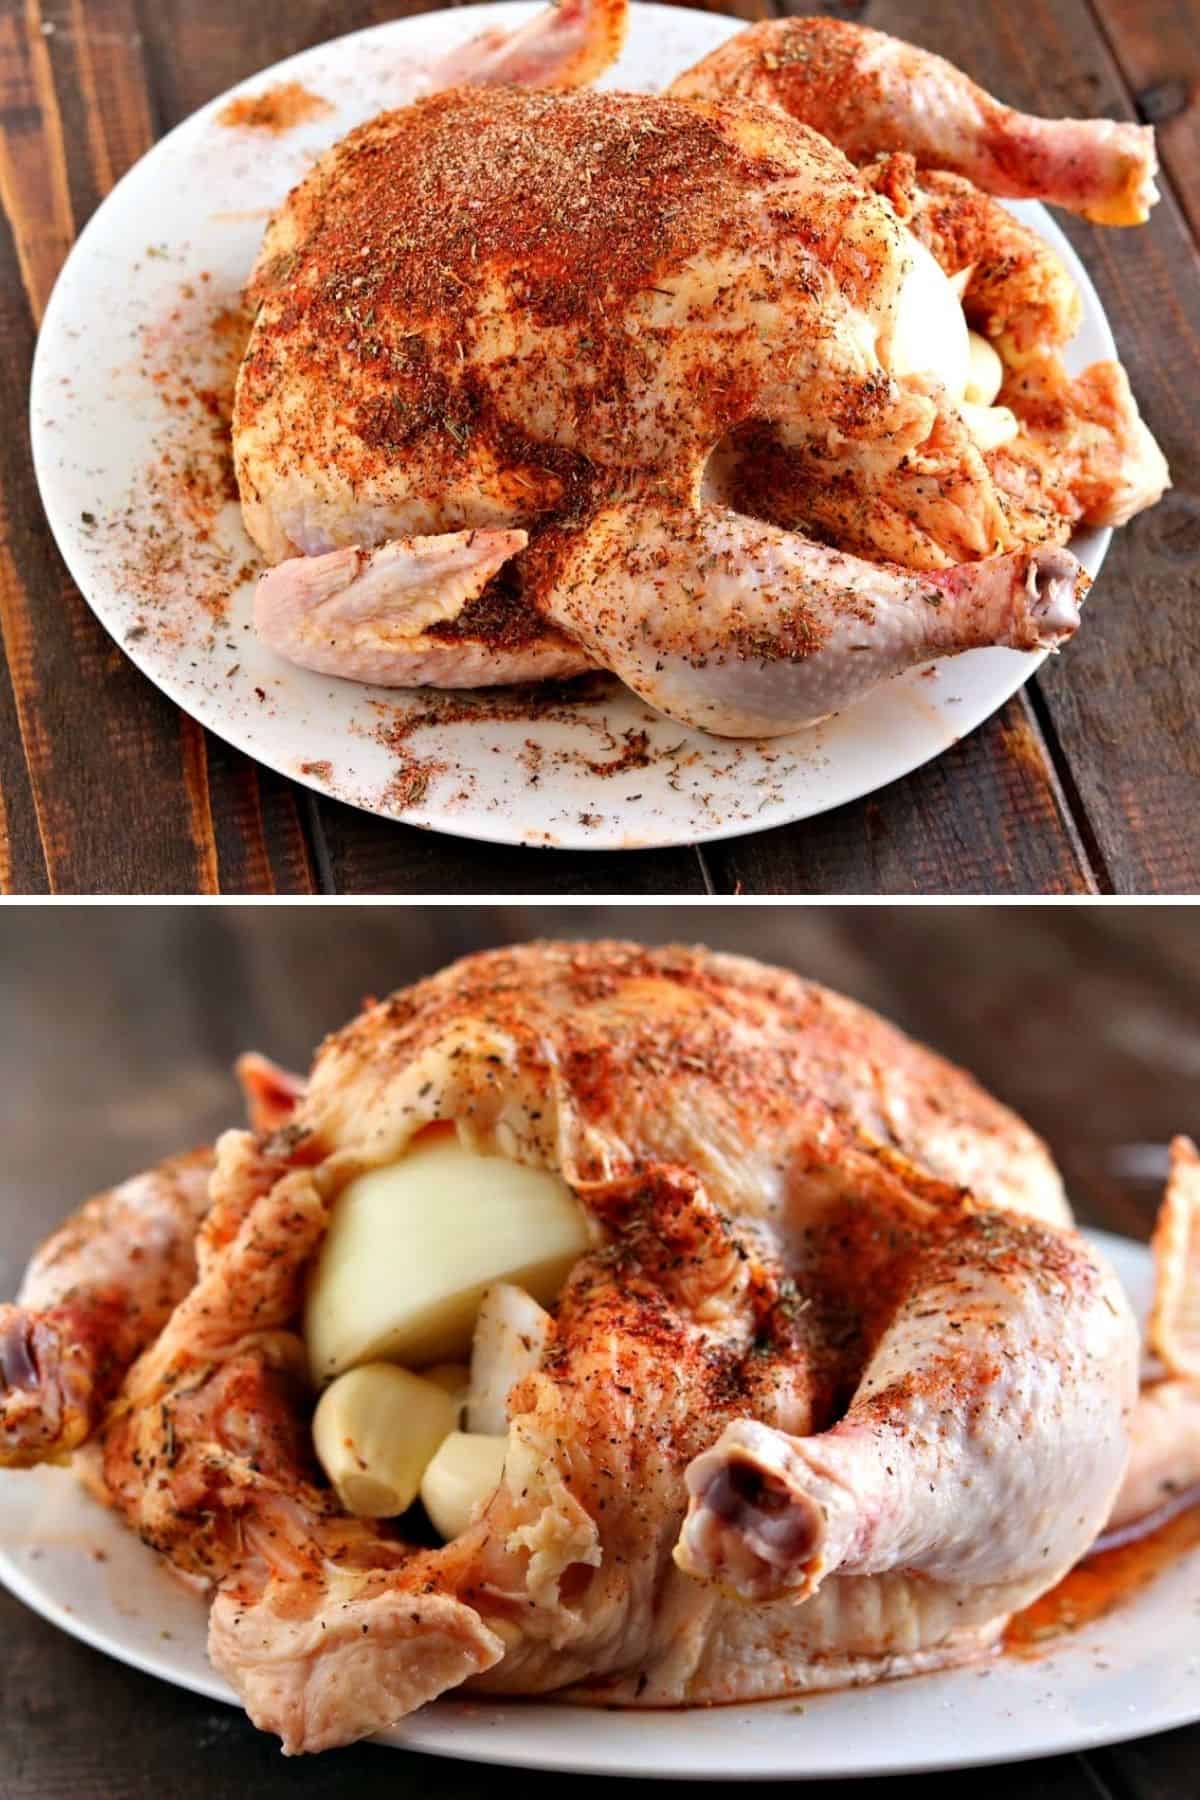 https://www.kyleecooks.com/wp-content/uploads/2017/03/Slow-Cooker-Whole-Chicken-1-1.jpg